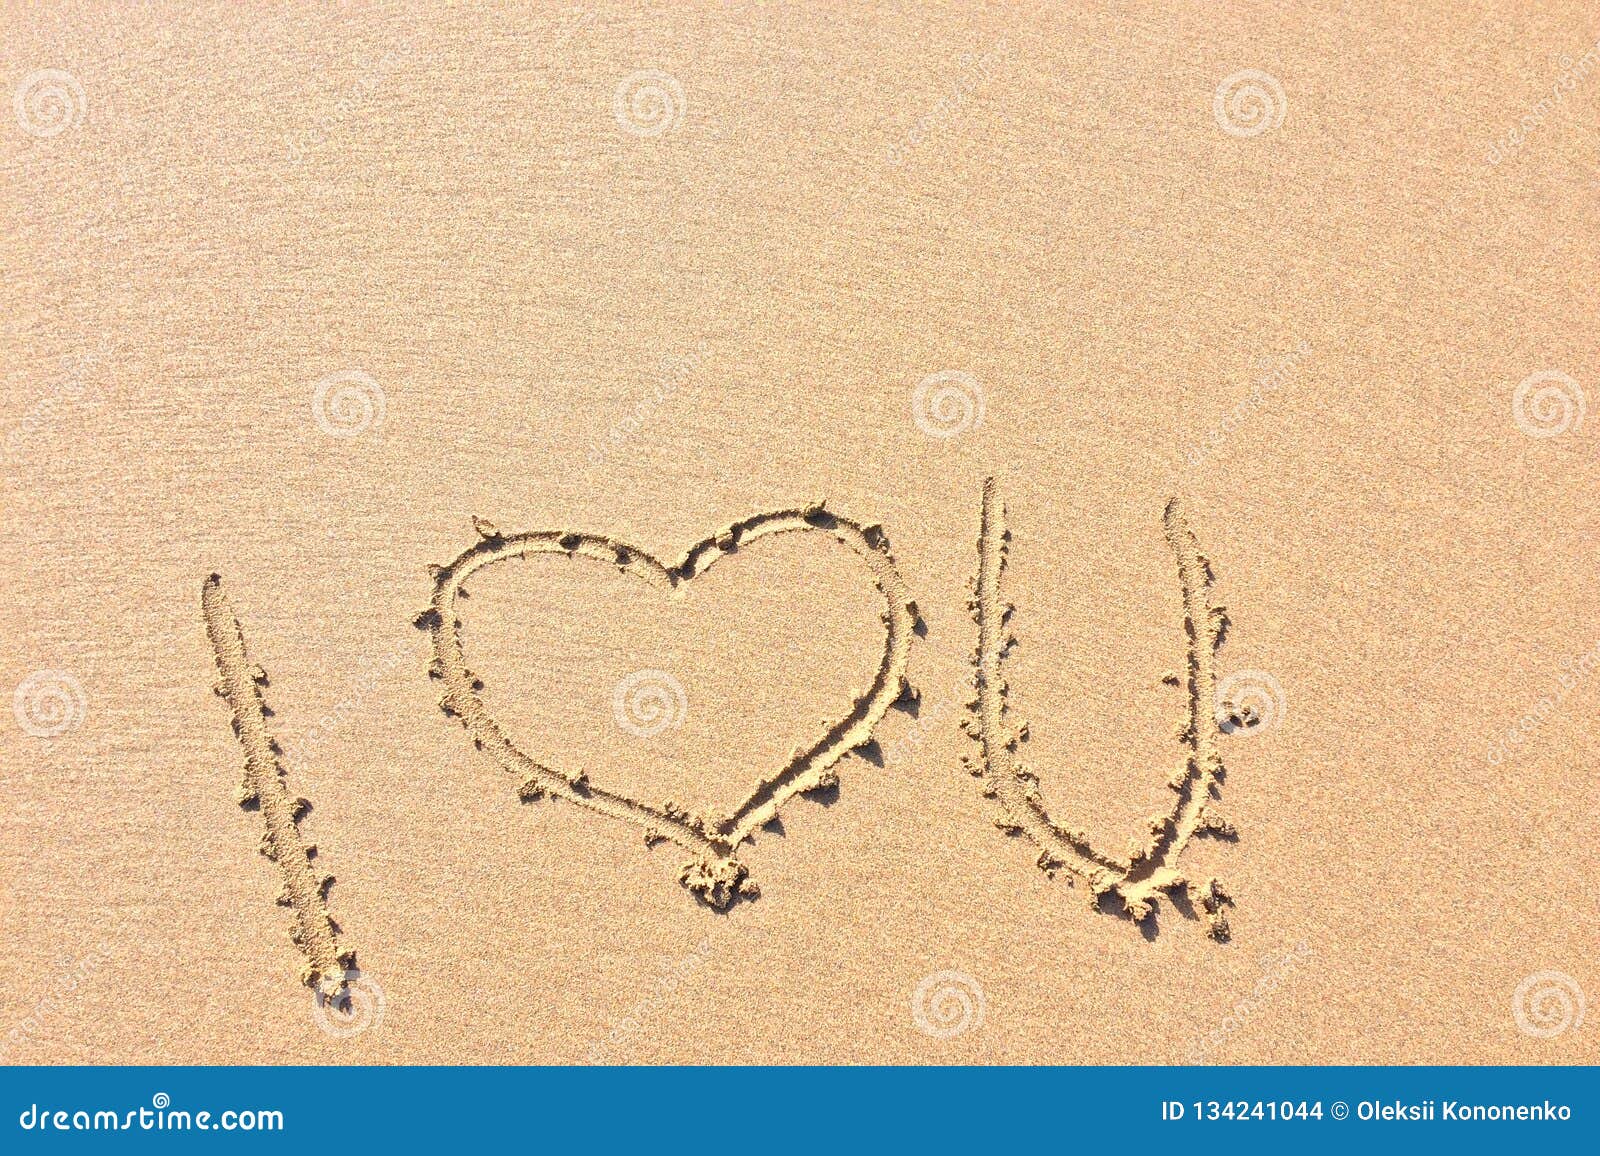 https://thumbs.dreamstime.com/z/i-love-you-inscription-sand-declaration-love-i-love-you-declaration-love-134241044.jpg